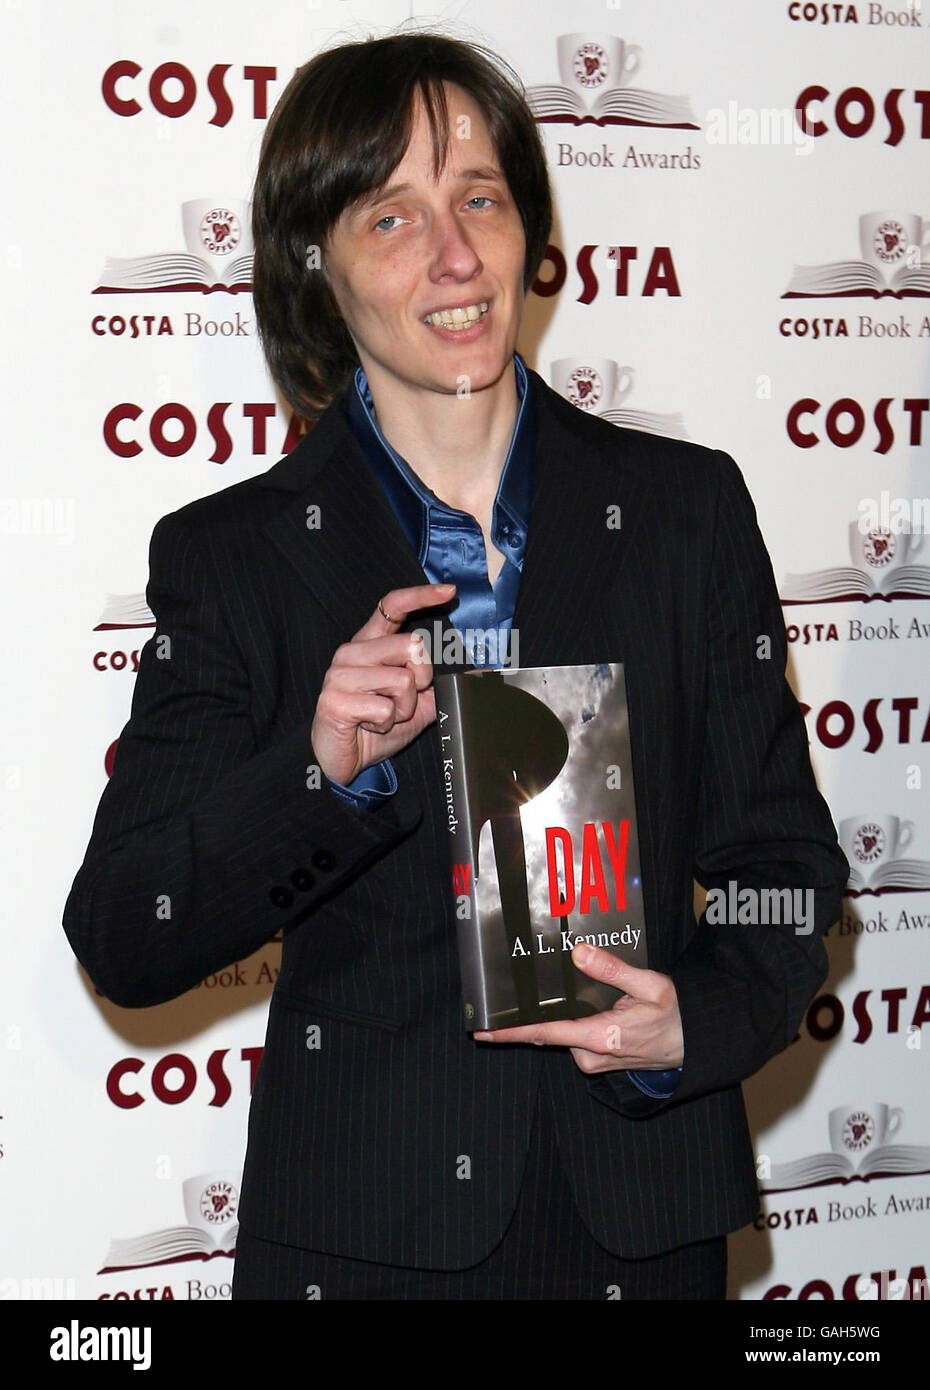 Costa buchen-Awards 2007 - London Stockfoto